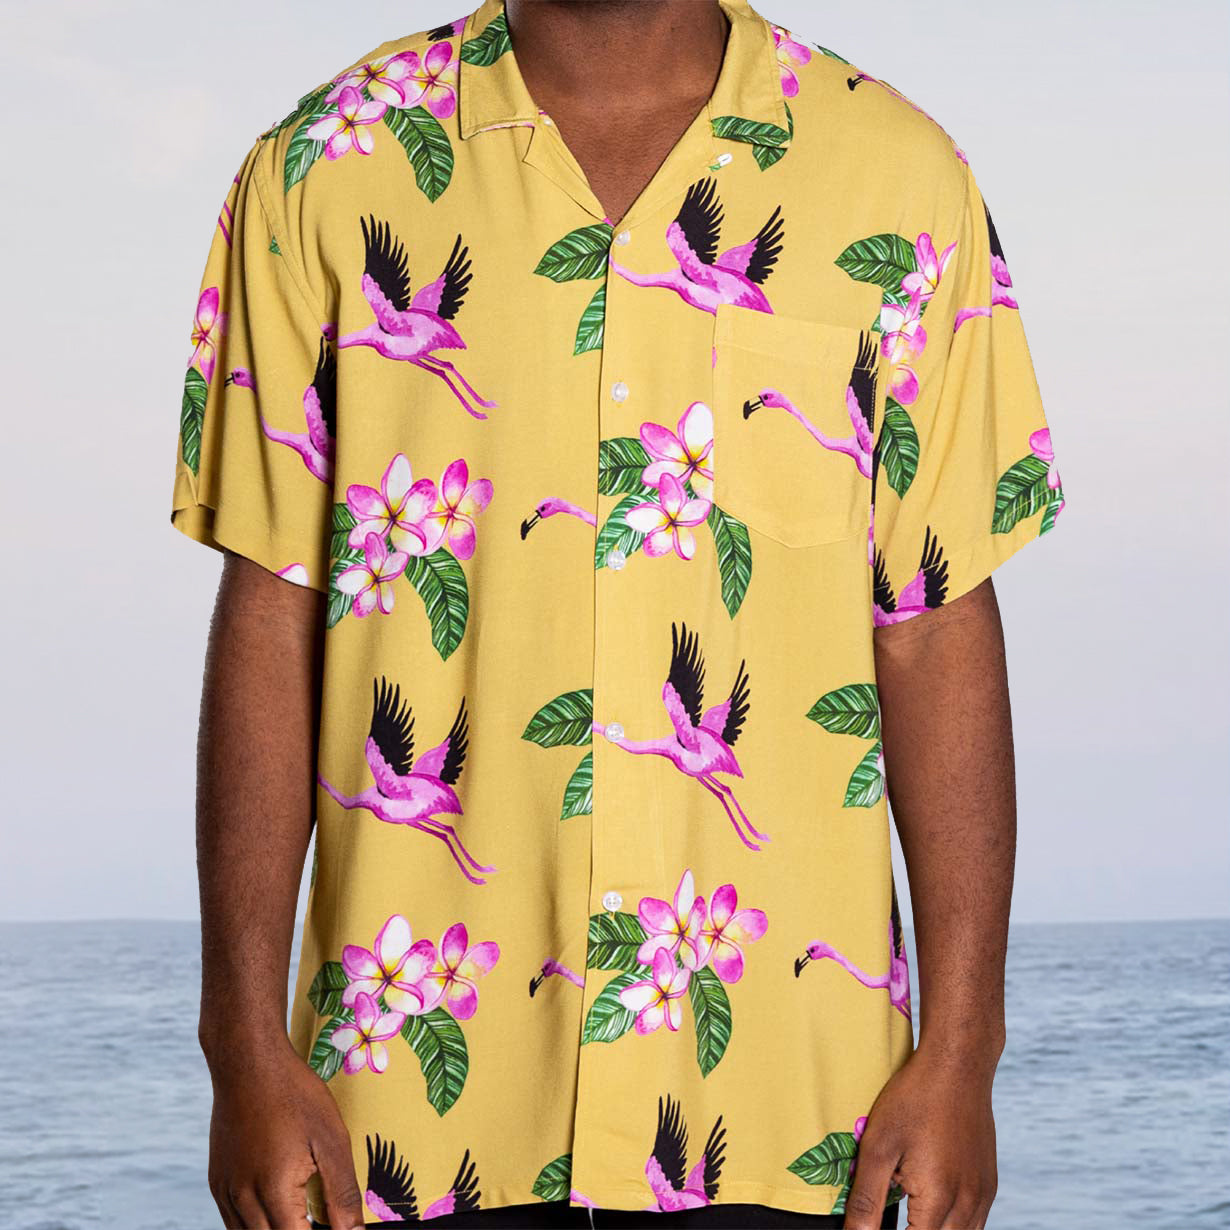 Resort style outdoor casual beach shirt